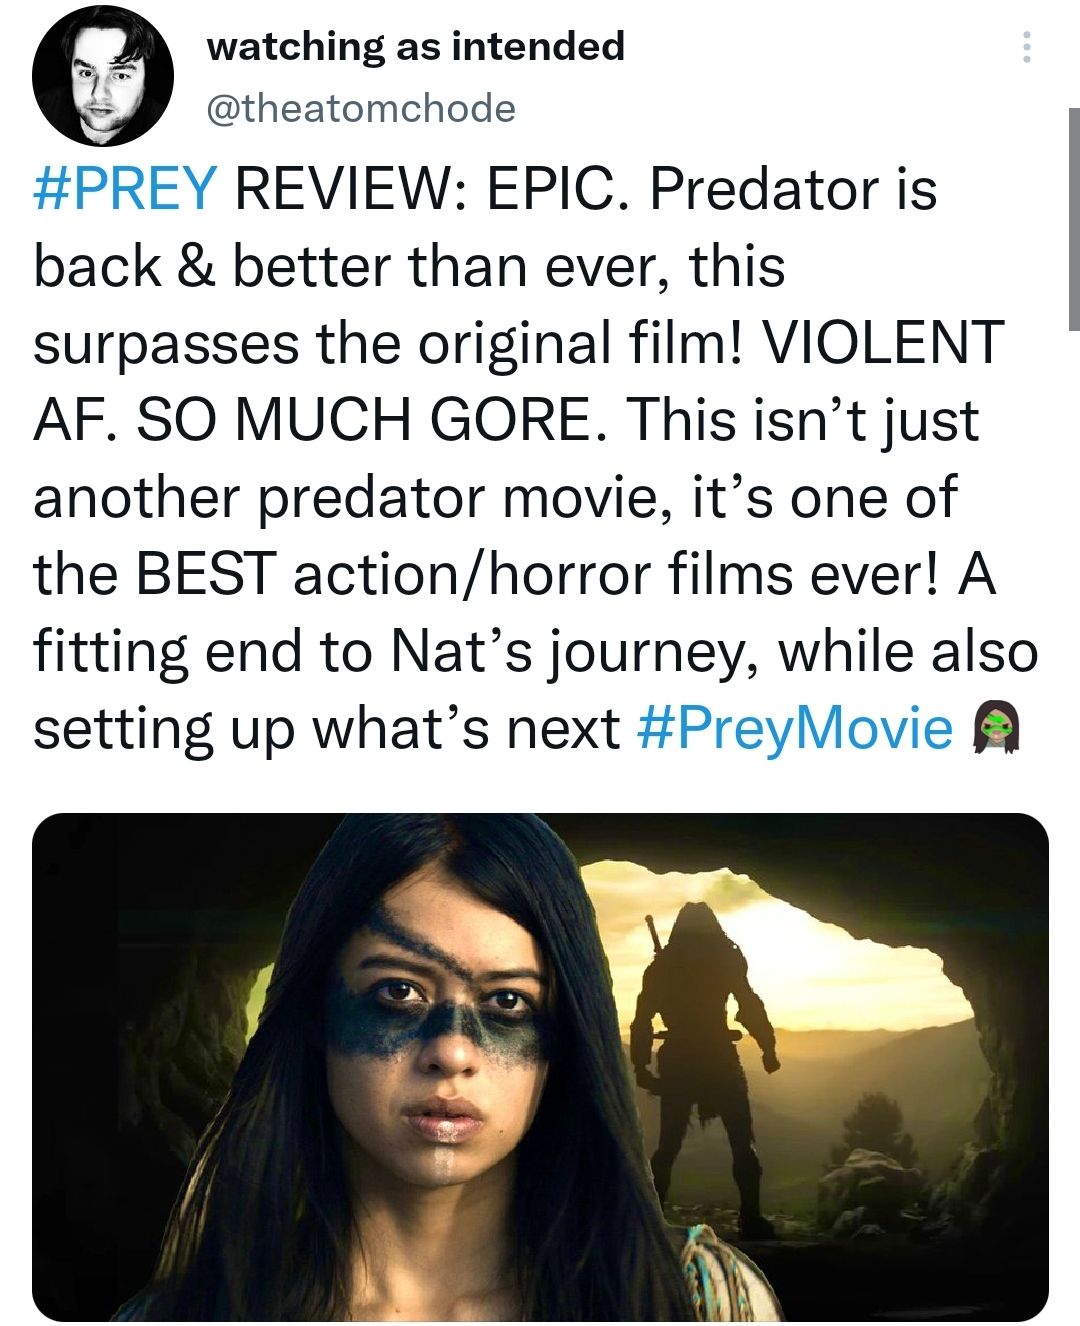 Latest 'Predator' flick is best since original